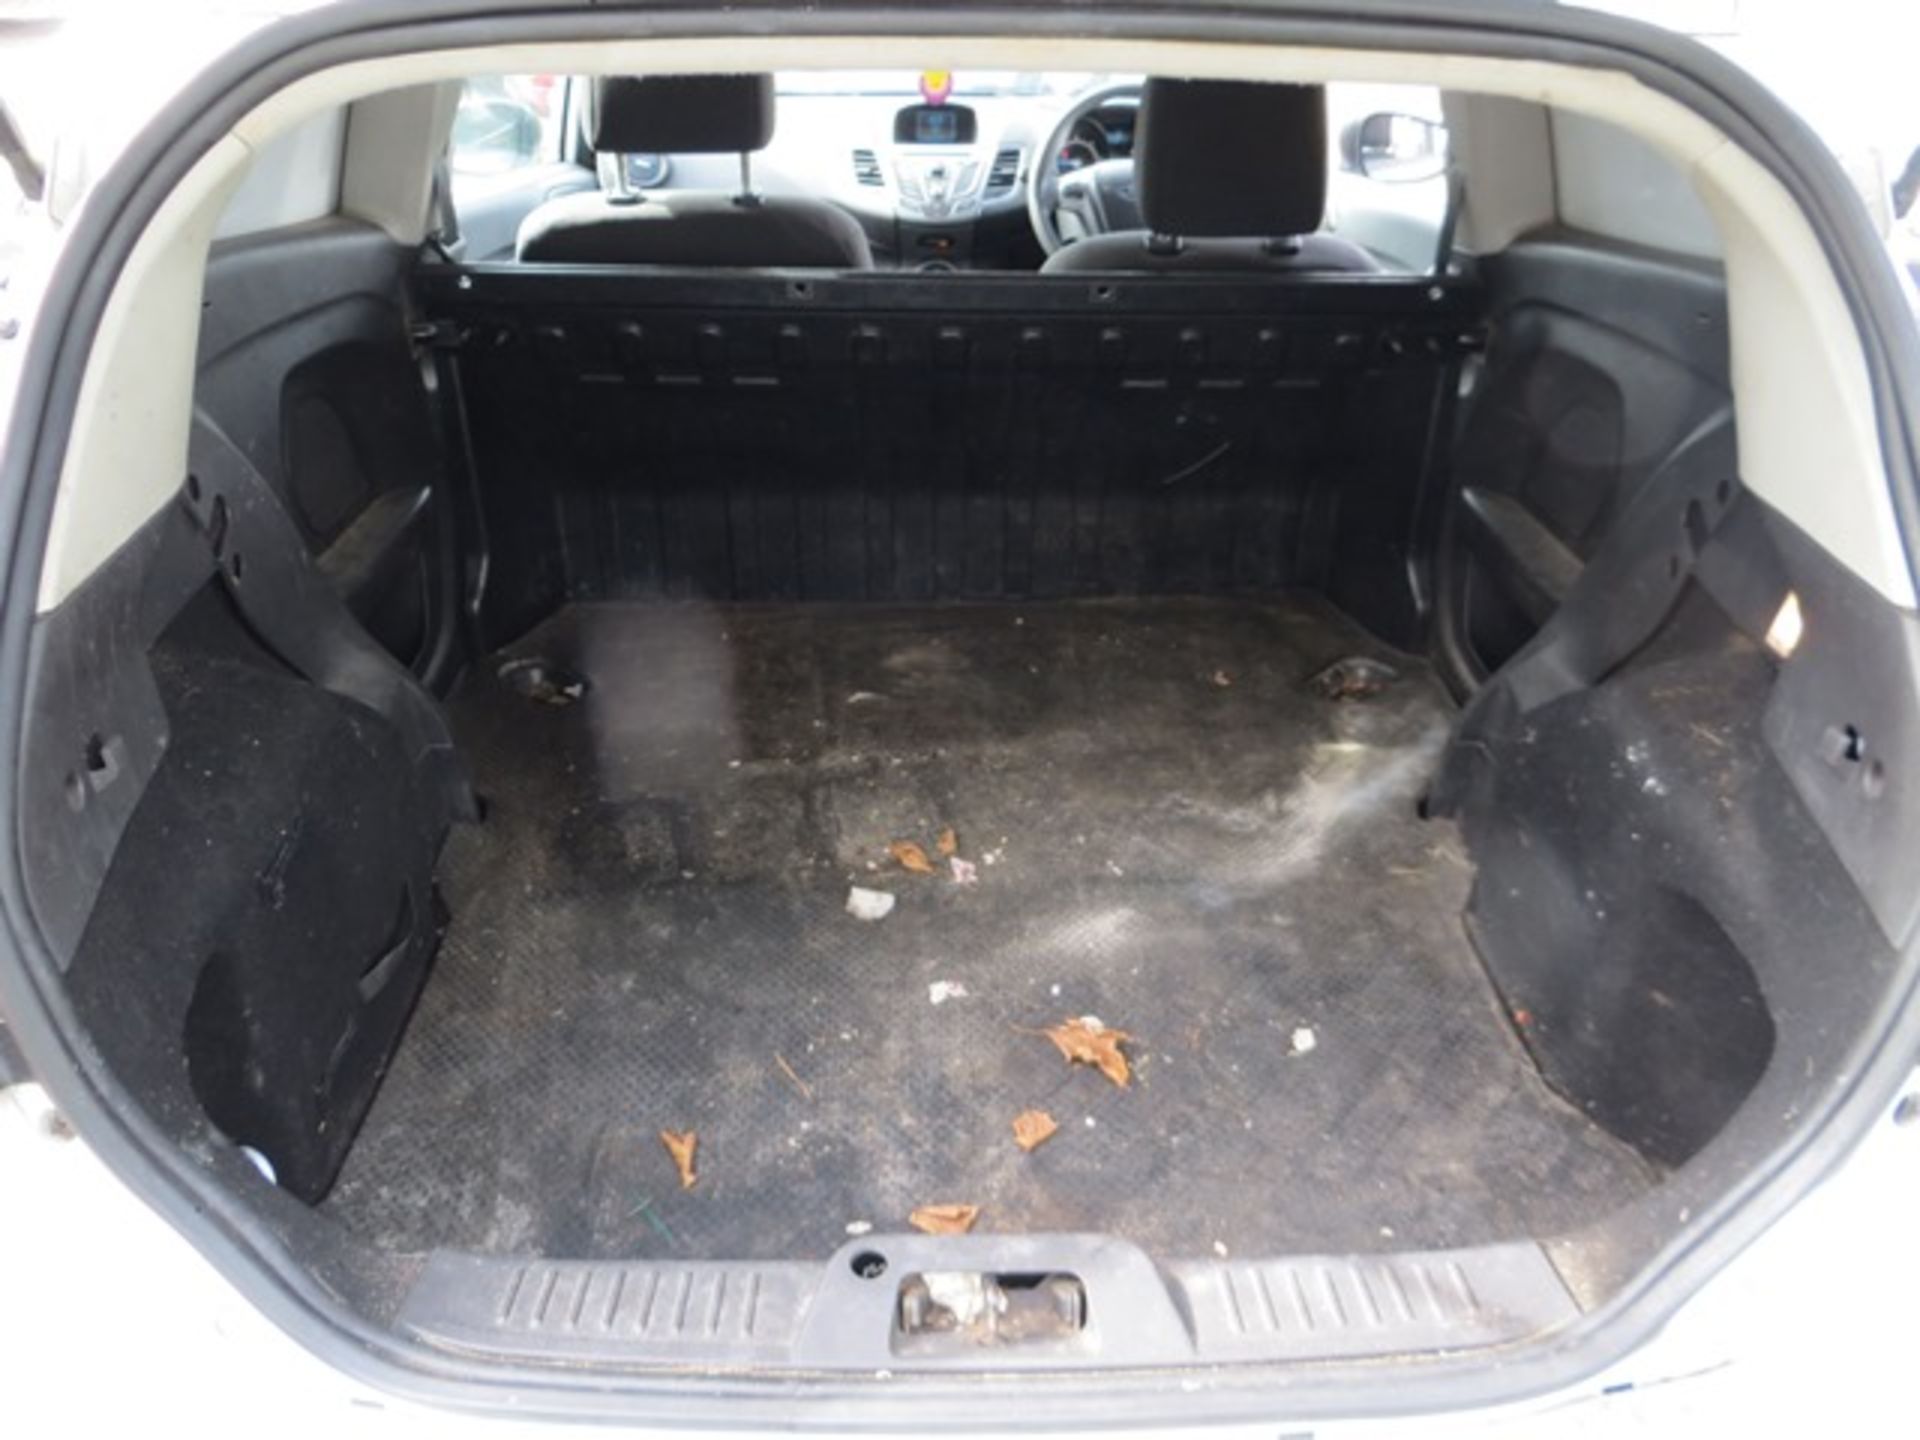 Ford Fiesta Base 1.5 TDCi Eco diesel panel van 1499cc Reg No NL14UXF DOR 01/05/2014 125,189 recorded - Image 7 of 7